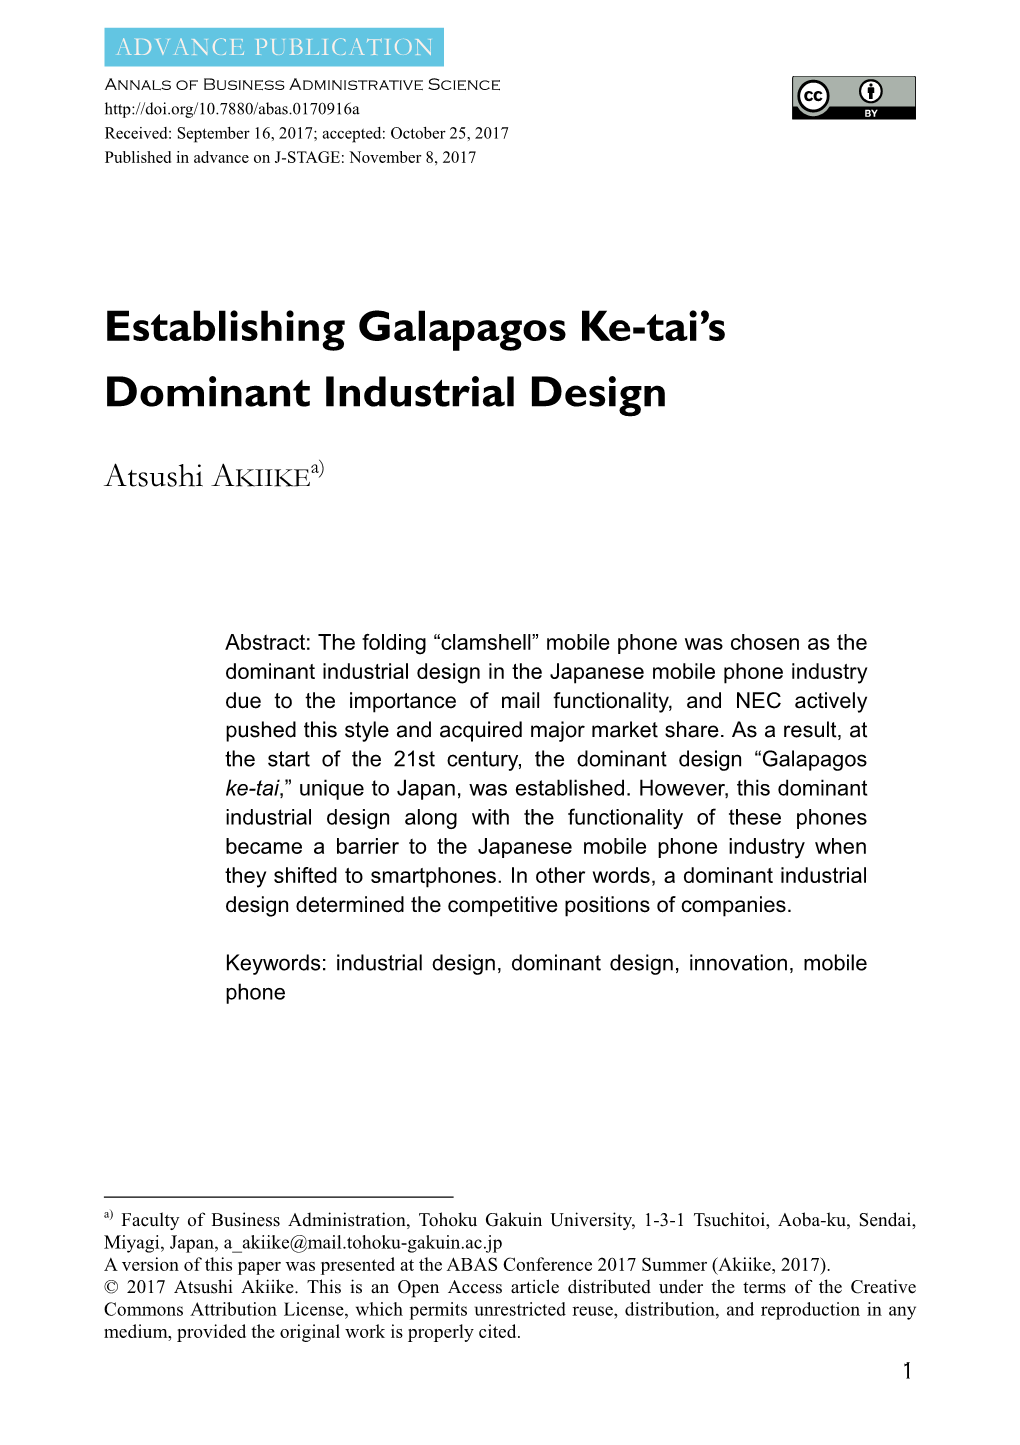 Establishing Galapagos Ke-Tai's Dominant Industrial Design